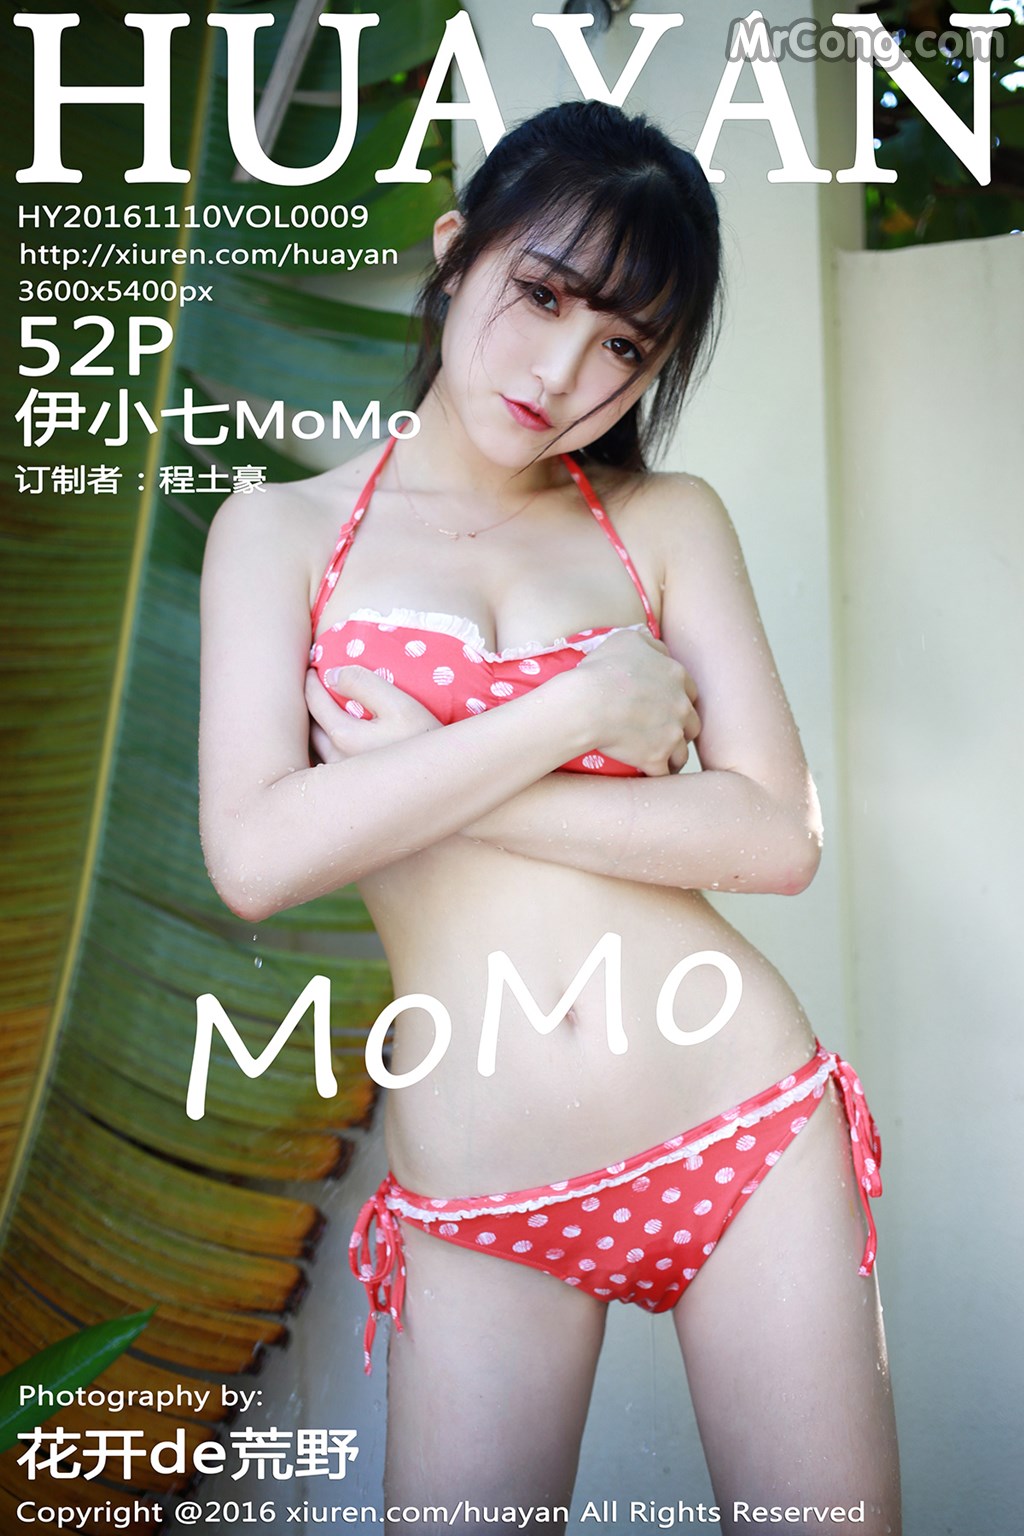 HuaYan Vol. 2009: Model MoMo (伊 小 七) (53 photos)